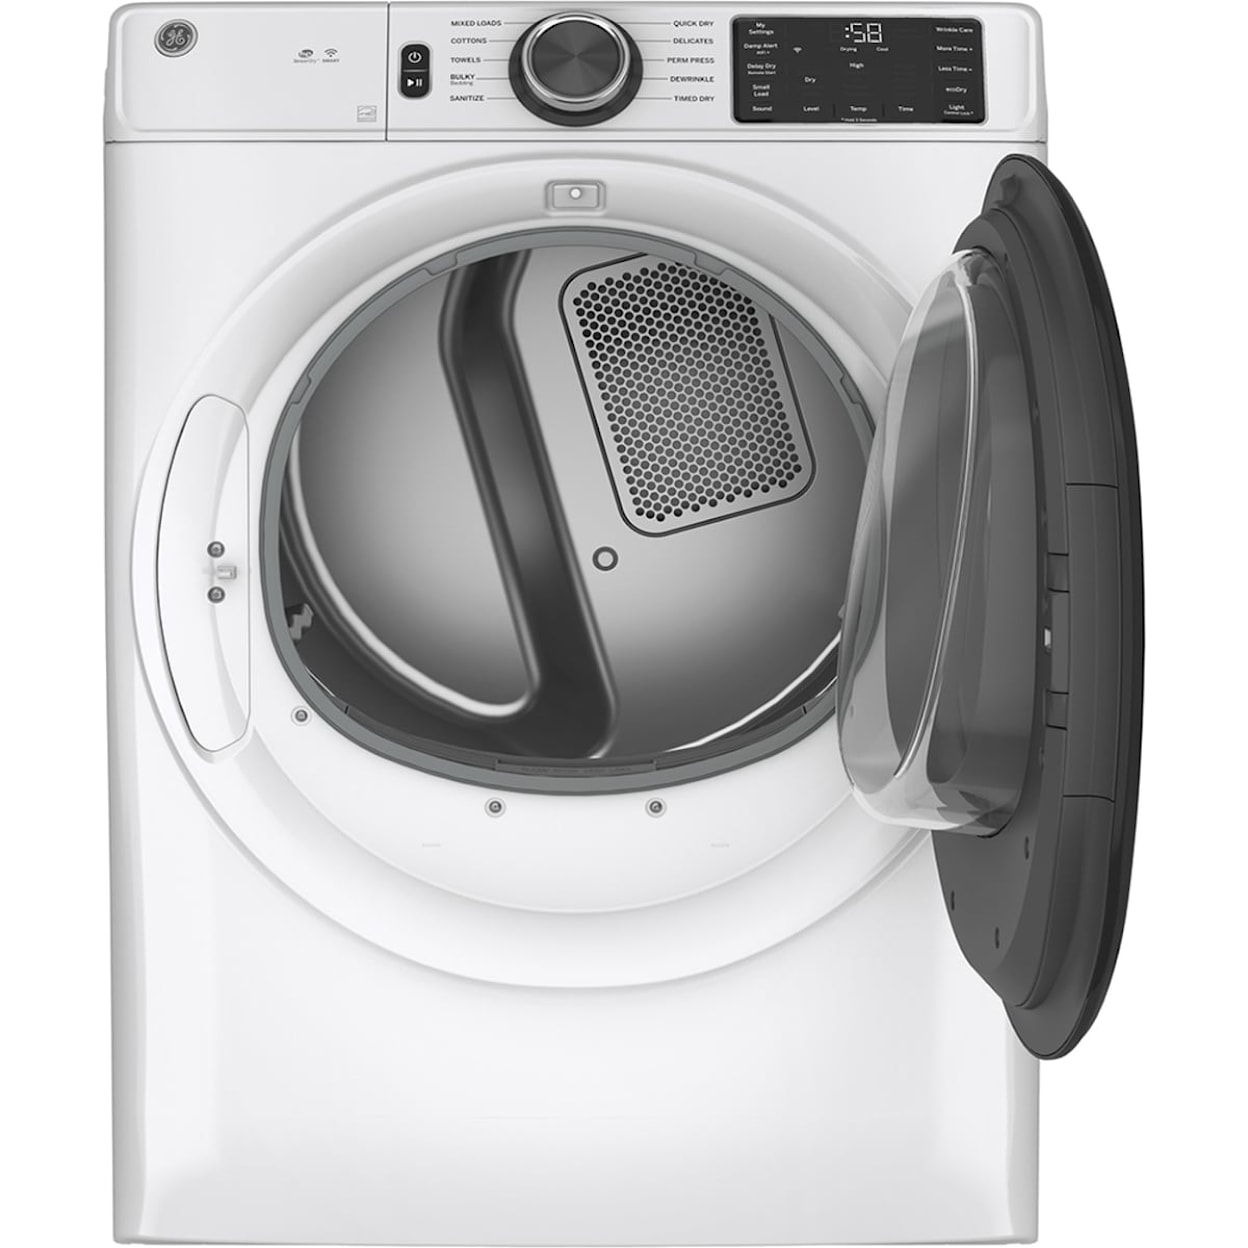 GE Appliances Dryers Capacity Dryer